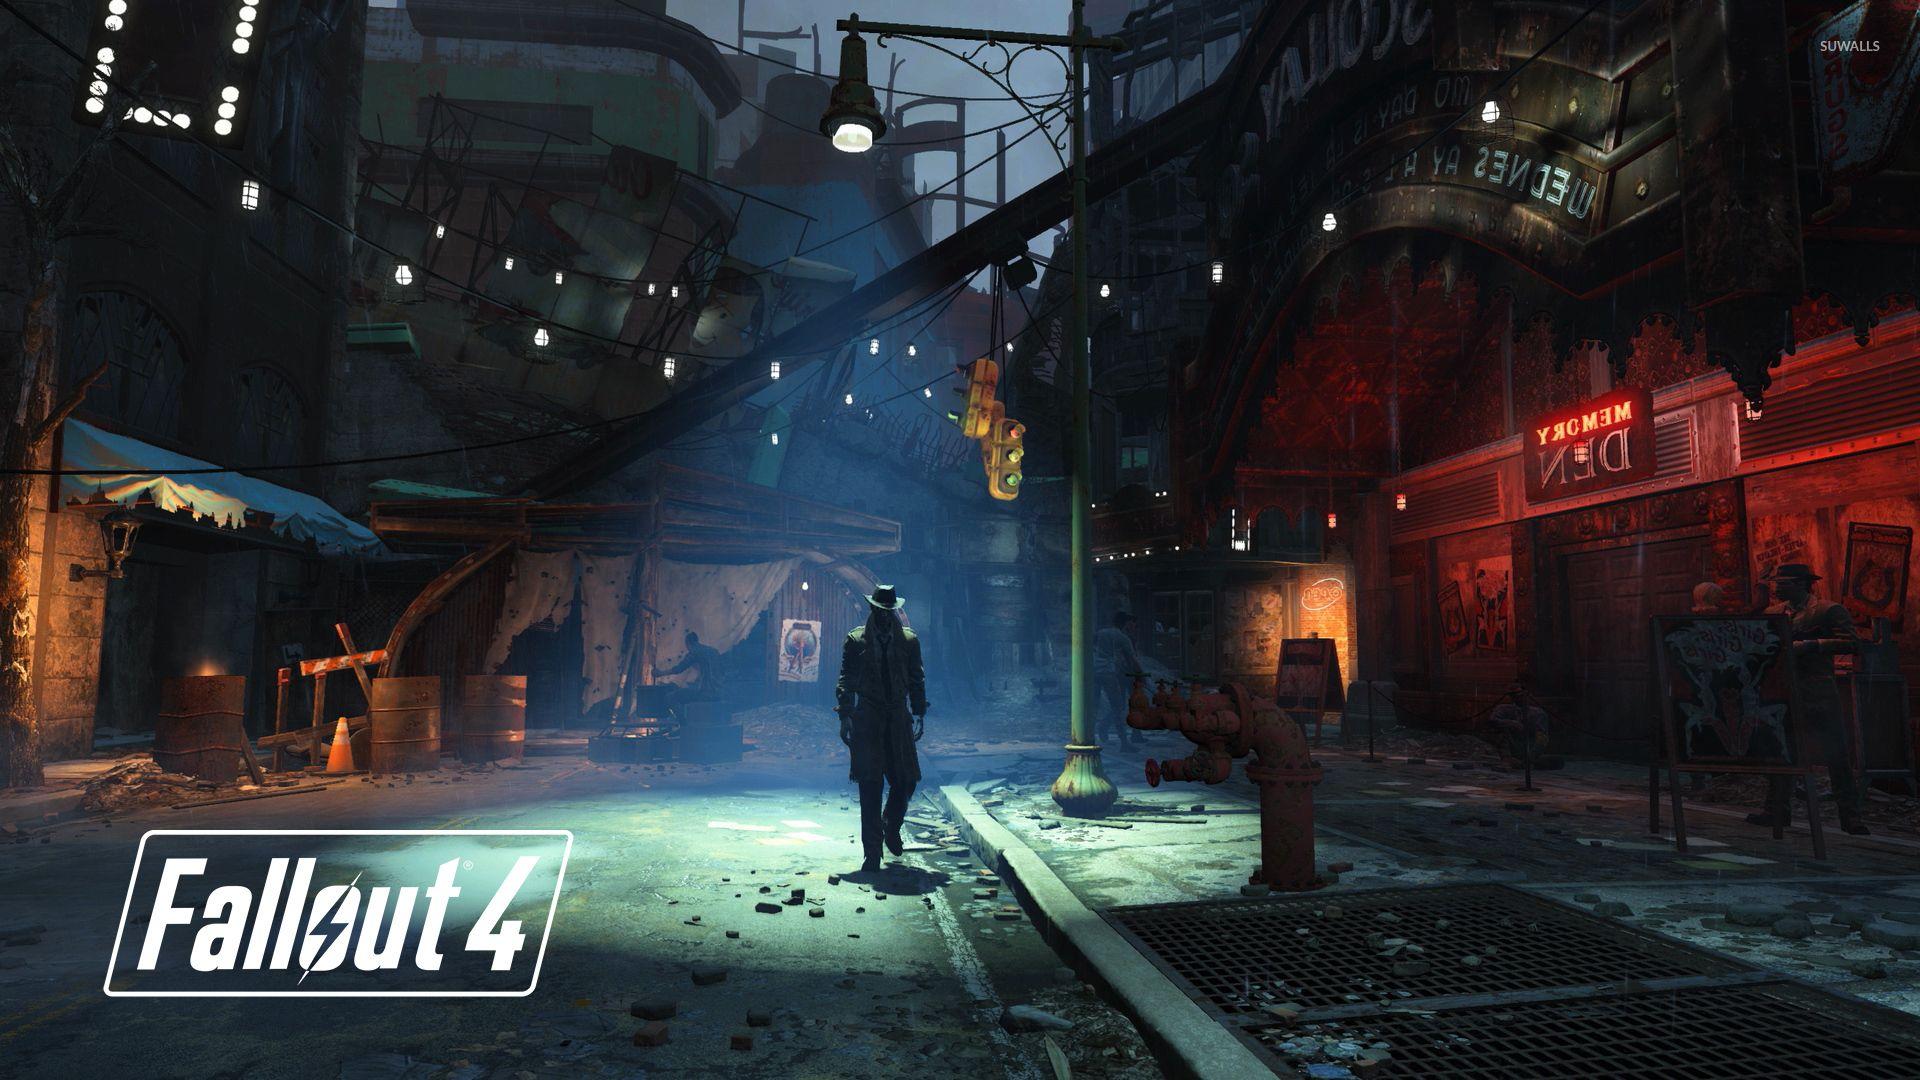 Dark street in Fallout 4 wallpaper wallpaper